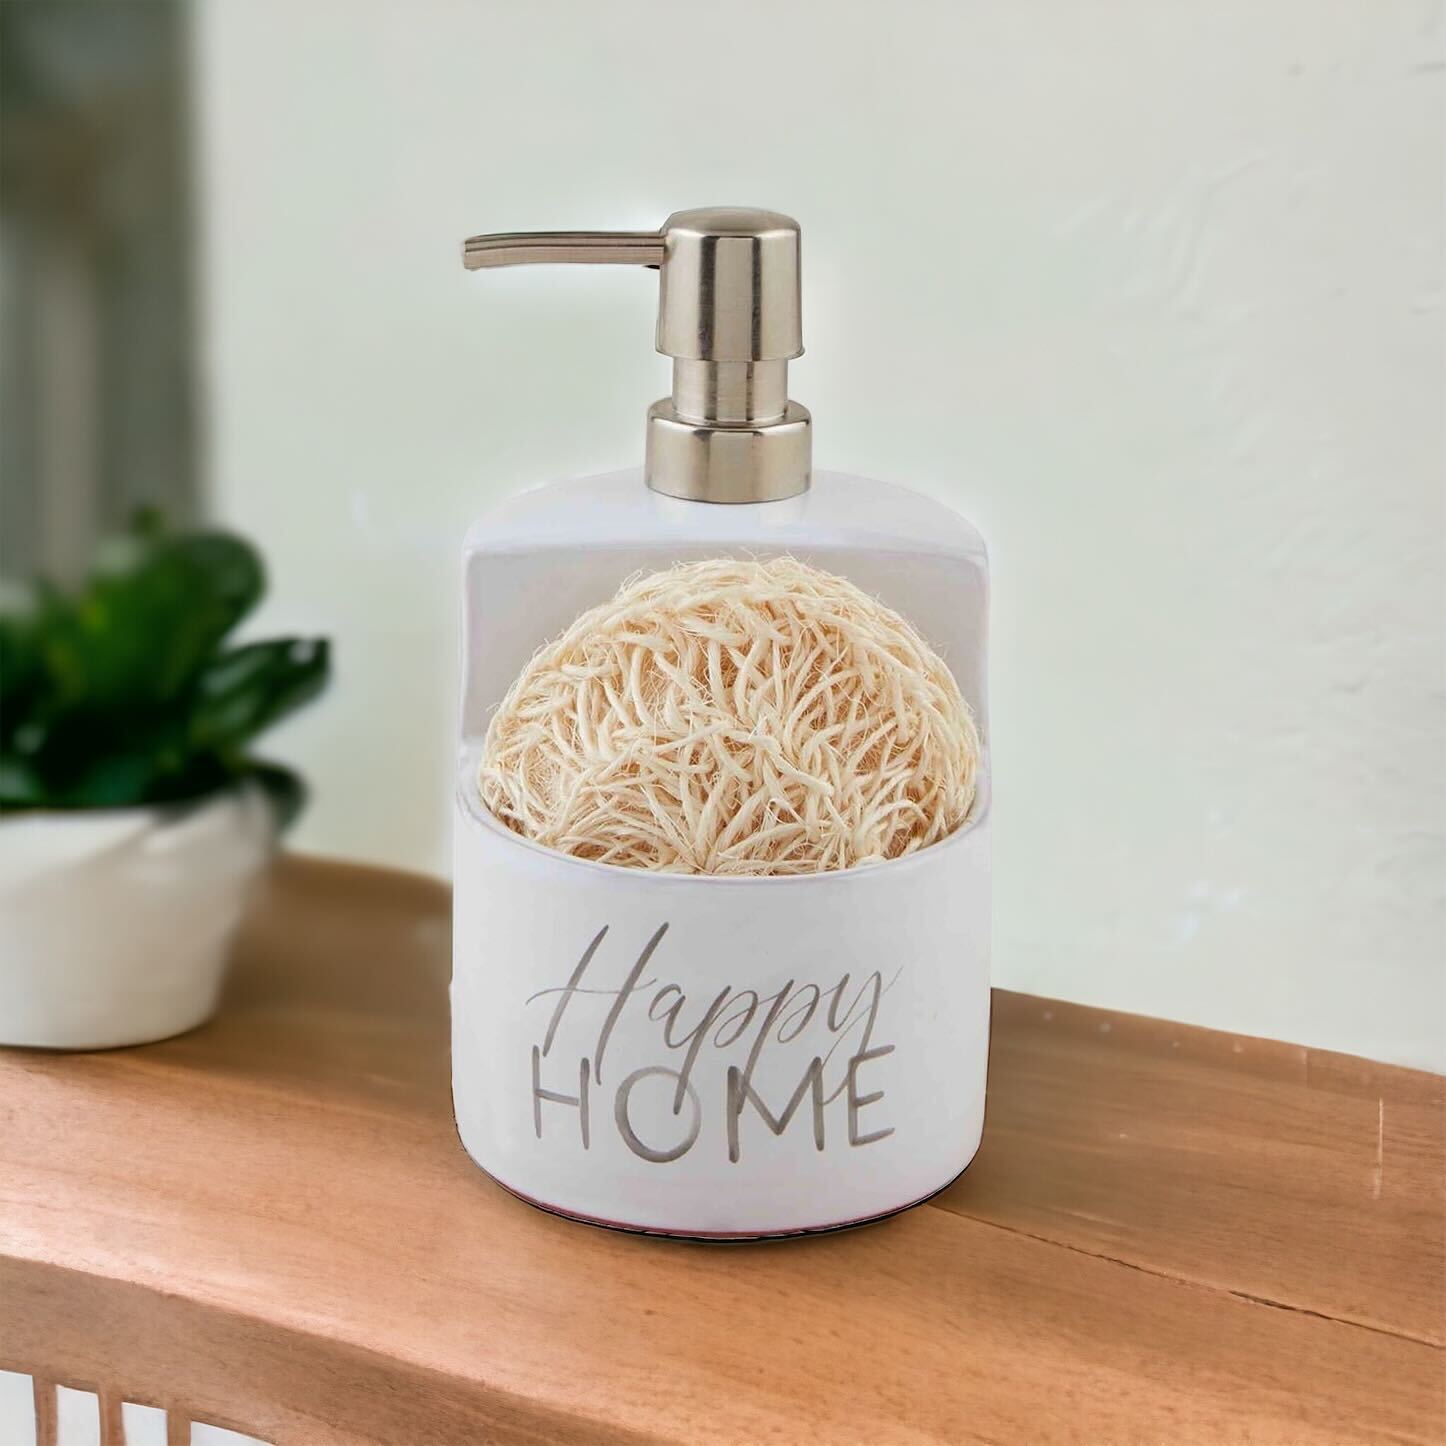 'Happy Home' Soap & Sponge Holder Set by Mud Pie